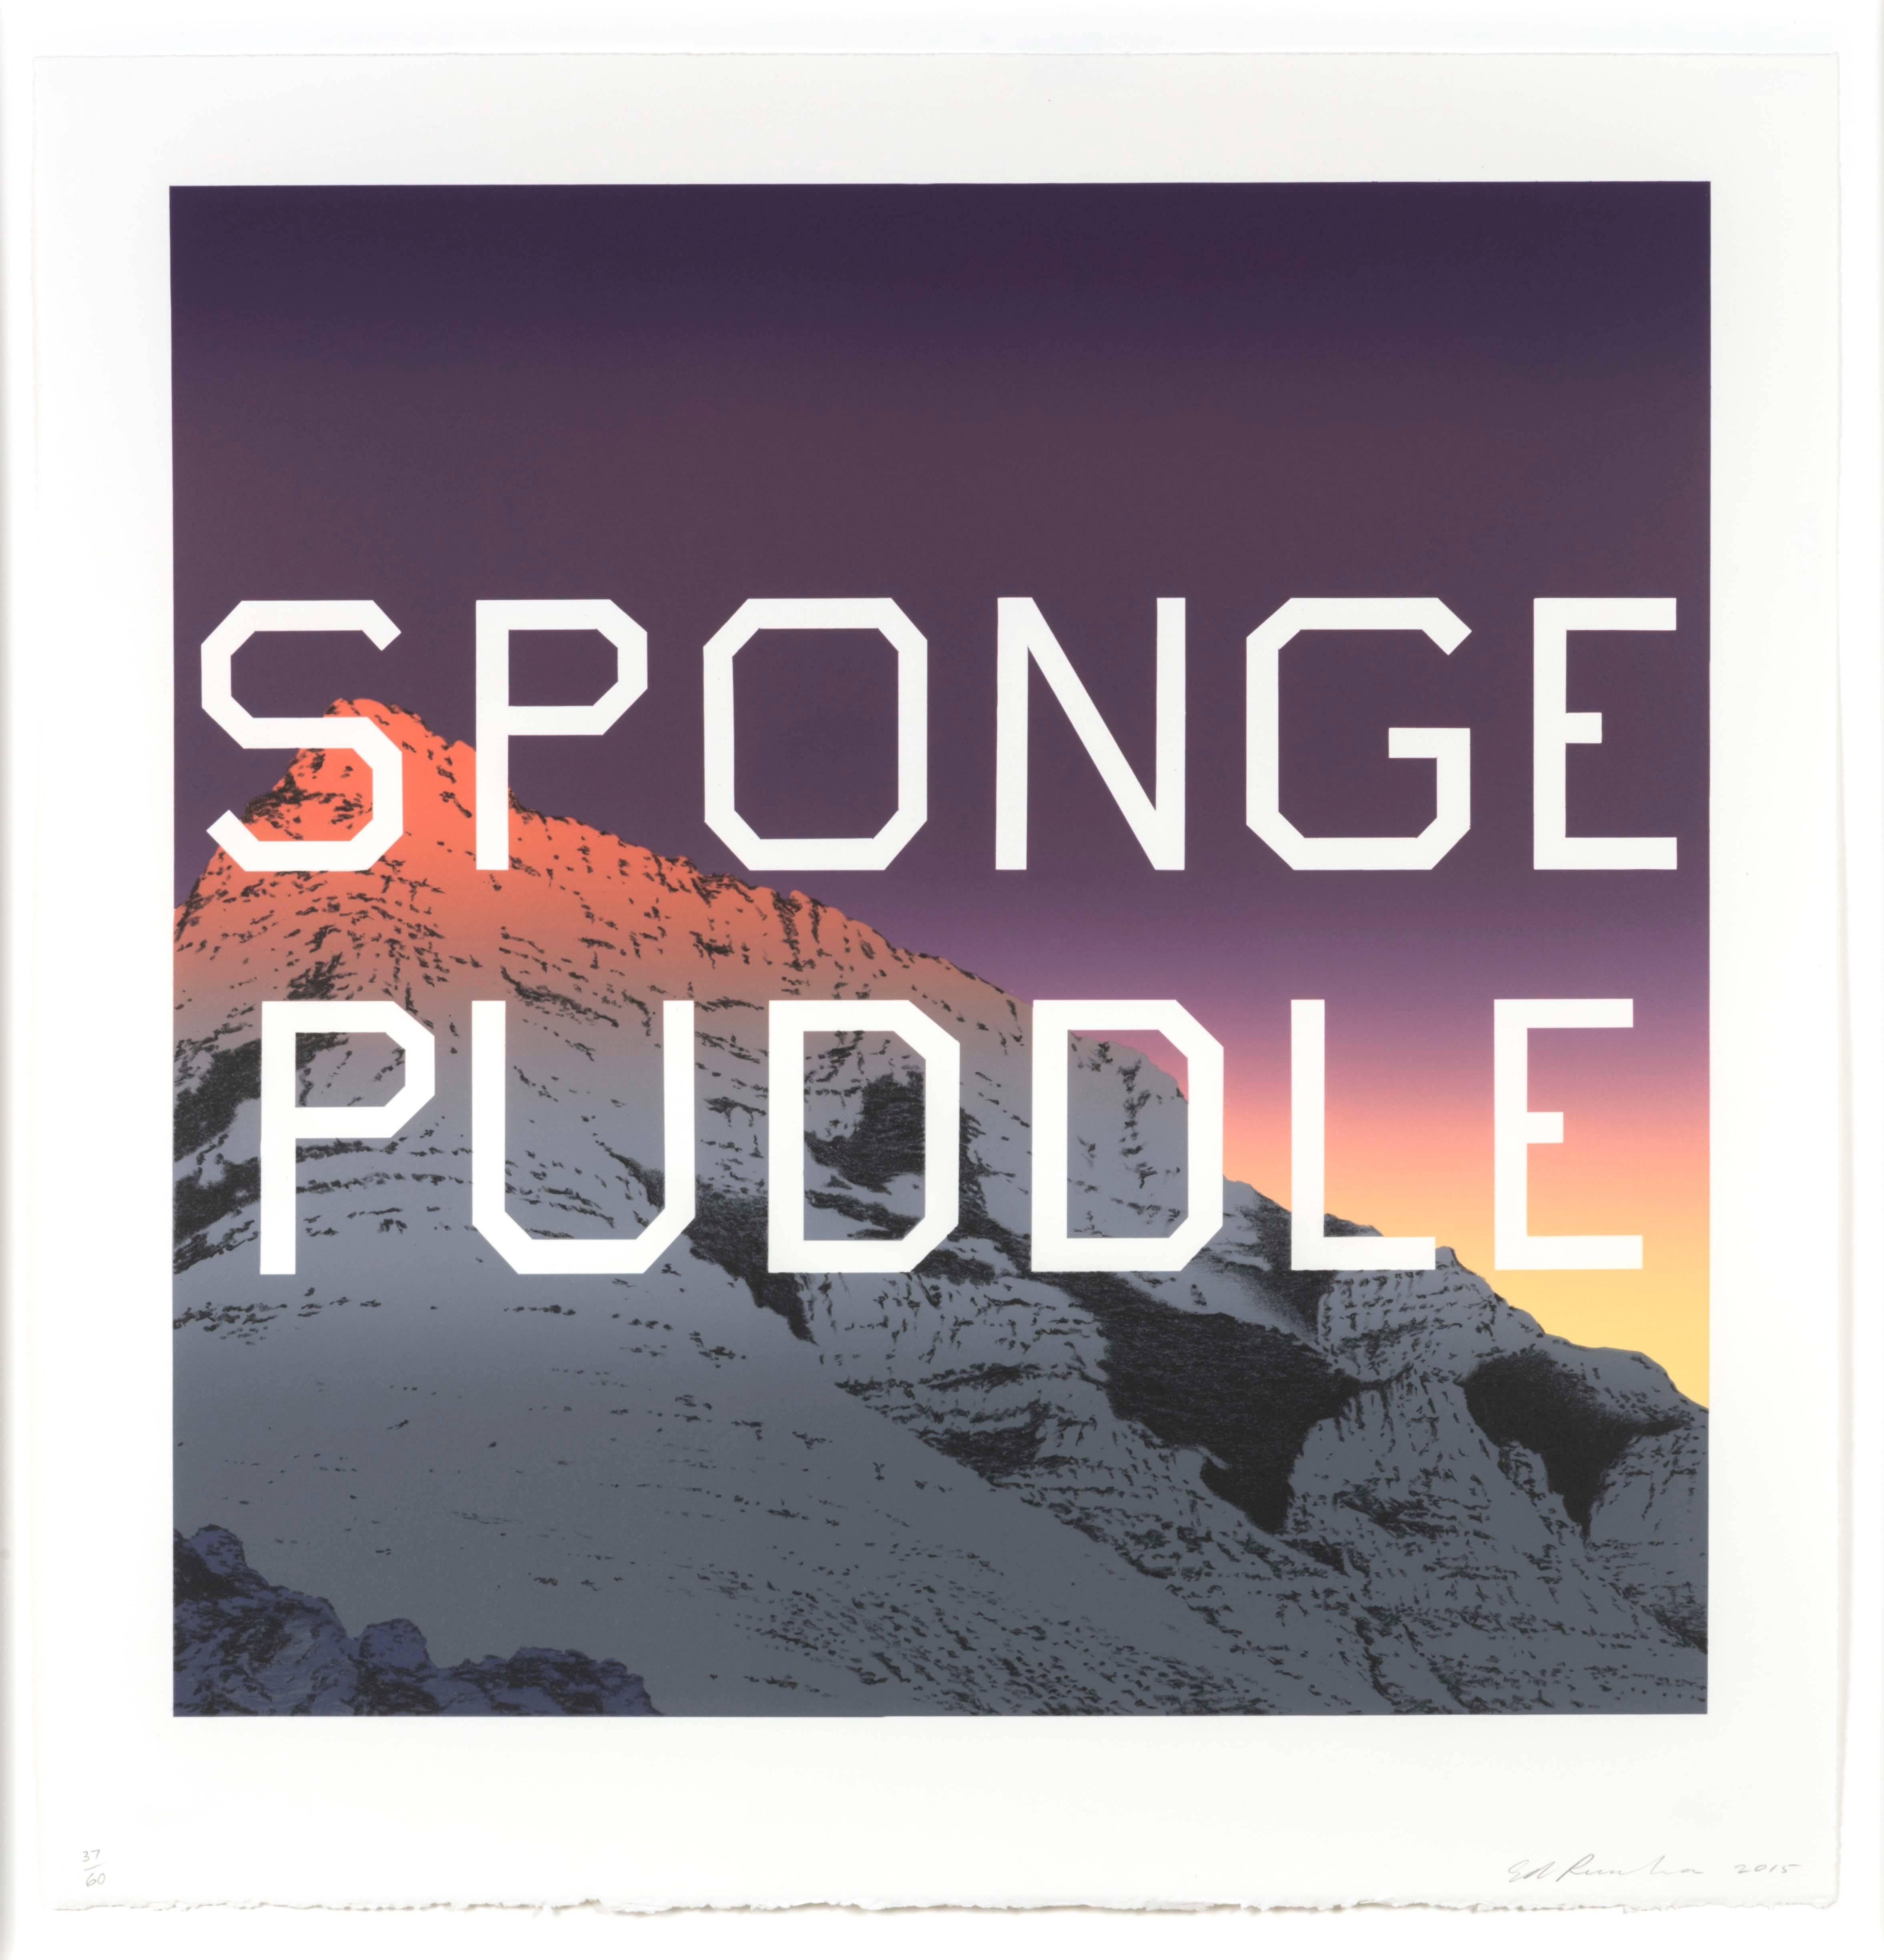 Sponge Puddle, 2015 - Print by Ed Ruscha